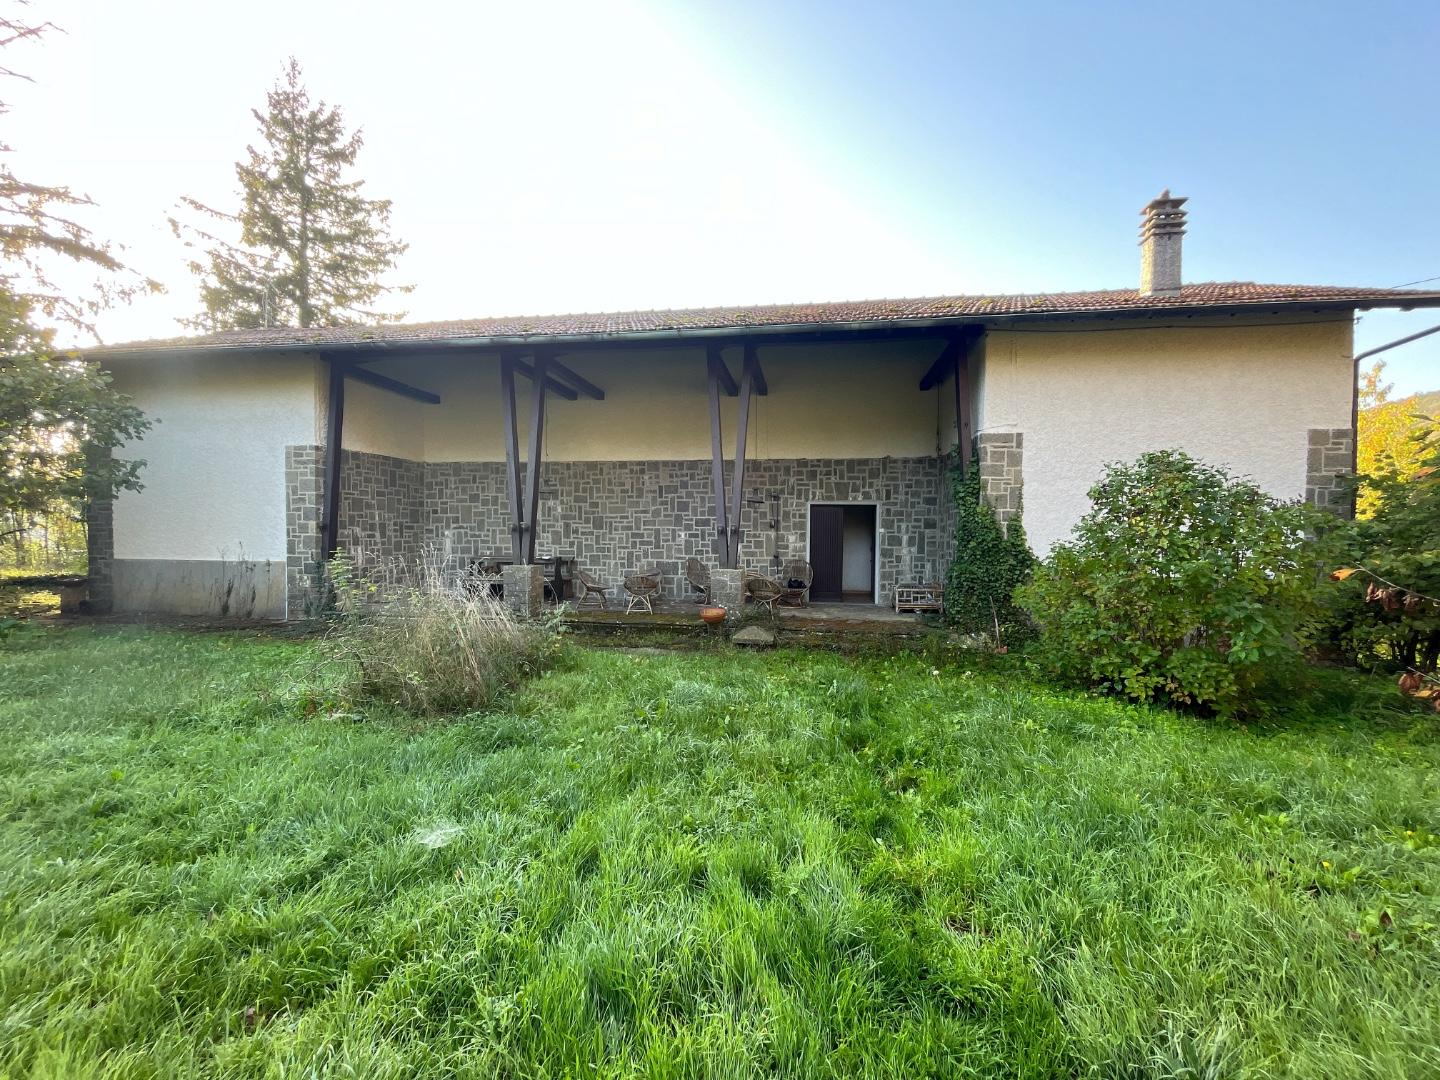 Farmhouse for sale in Pontremoli (MS)